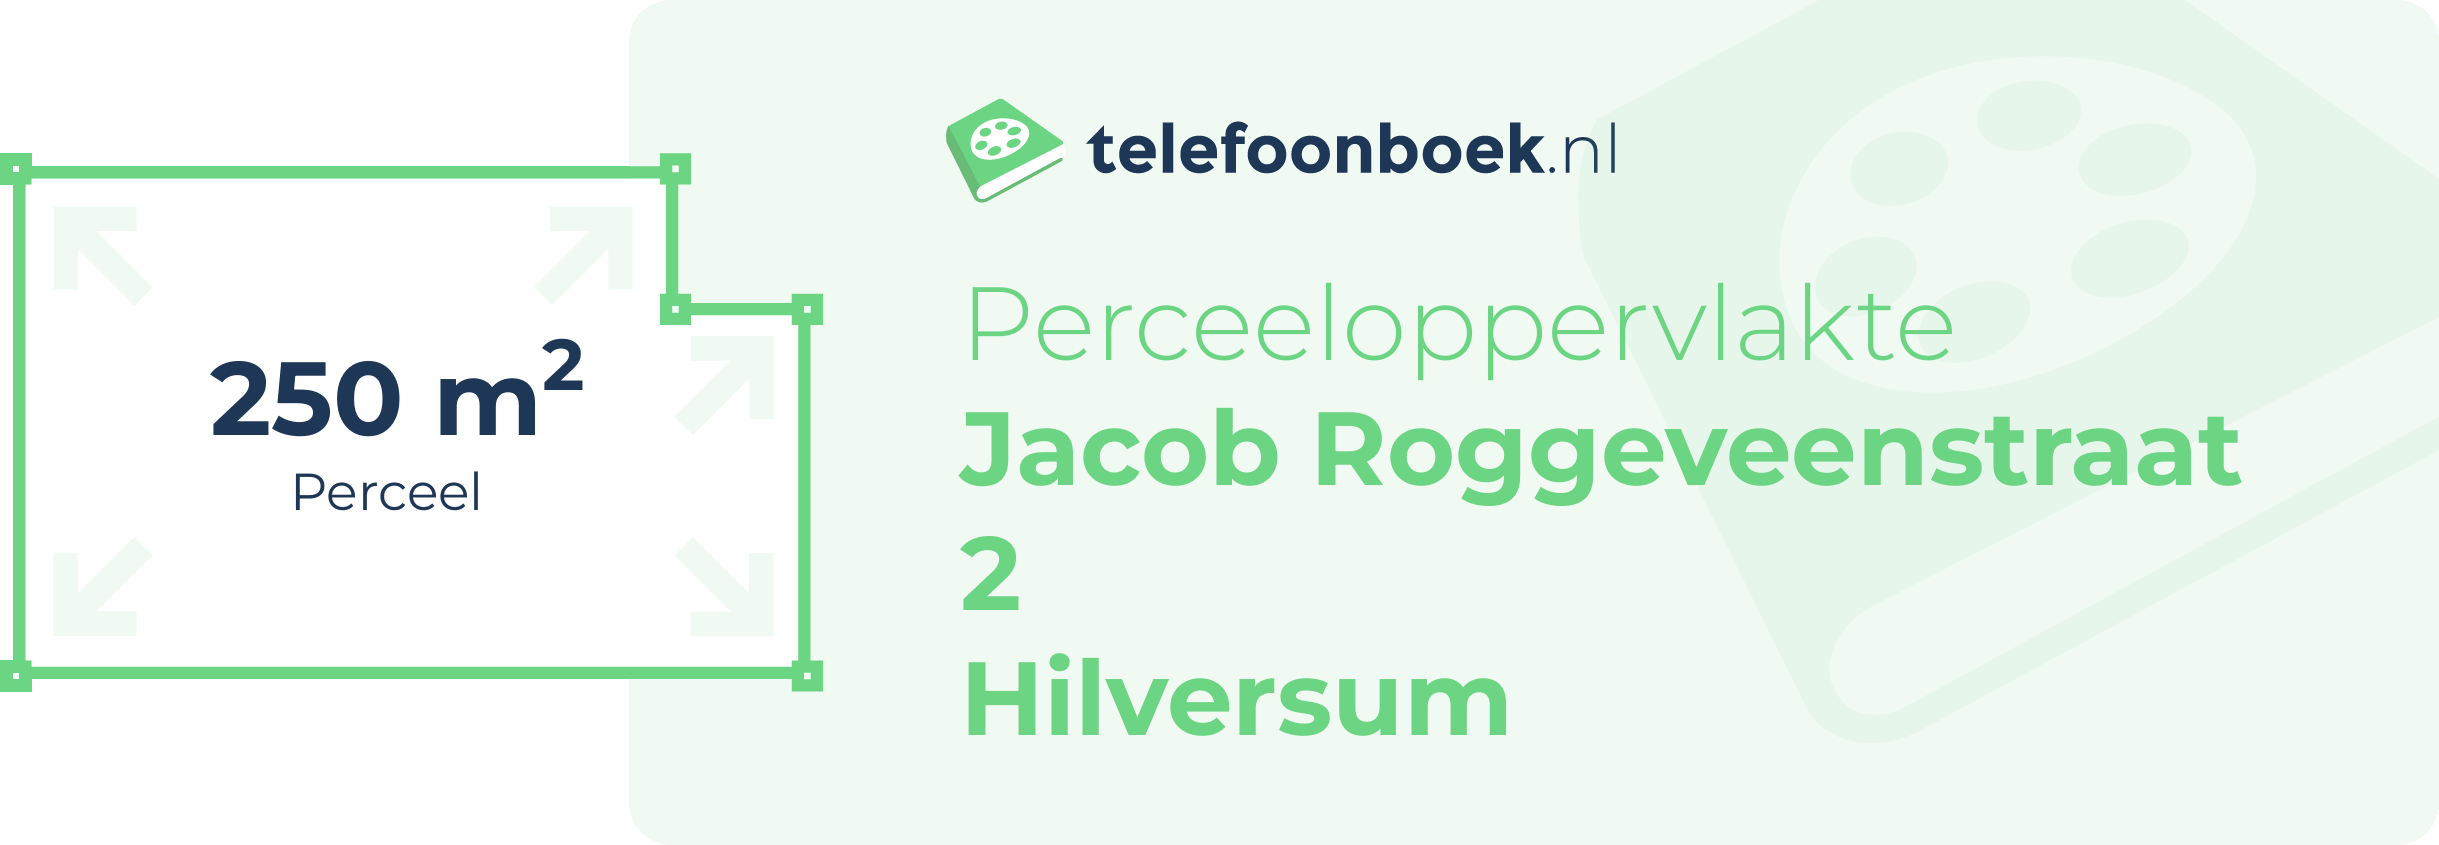 Perceeloppervlakte Jacob Roggeveenstraat 2 Hilversum